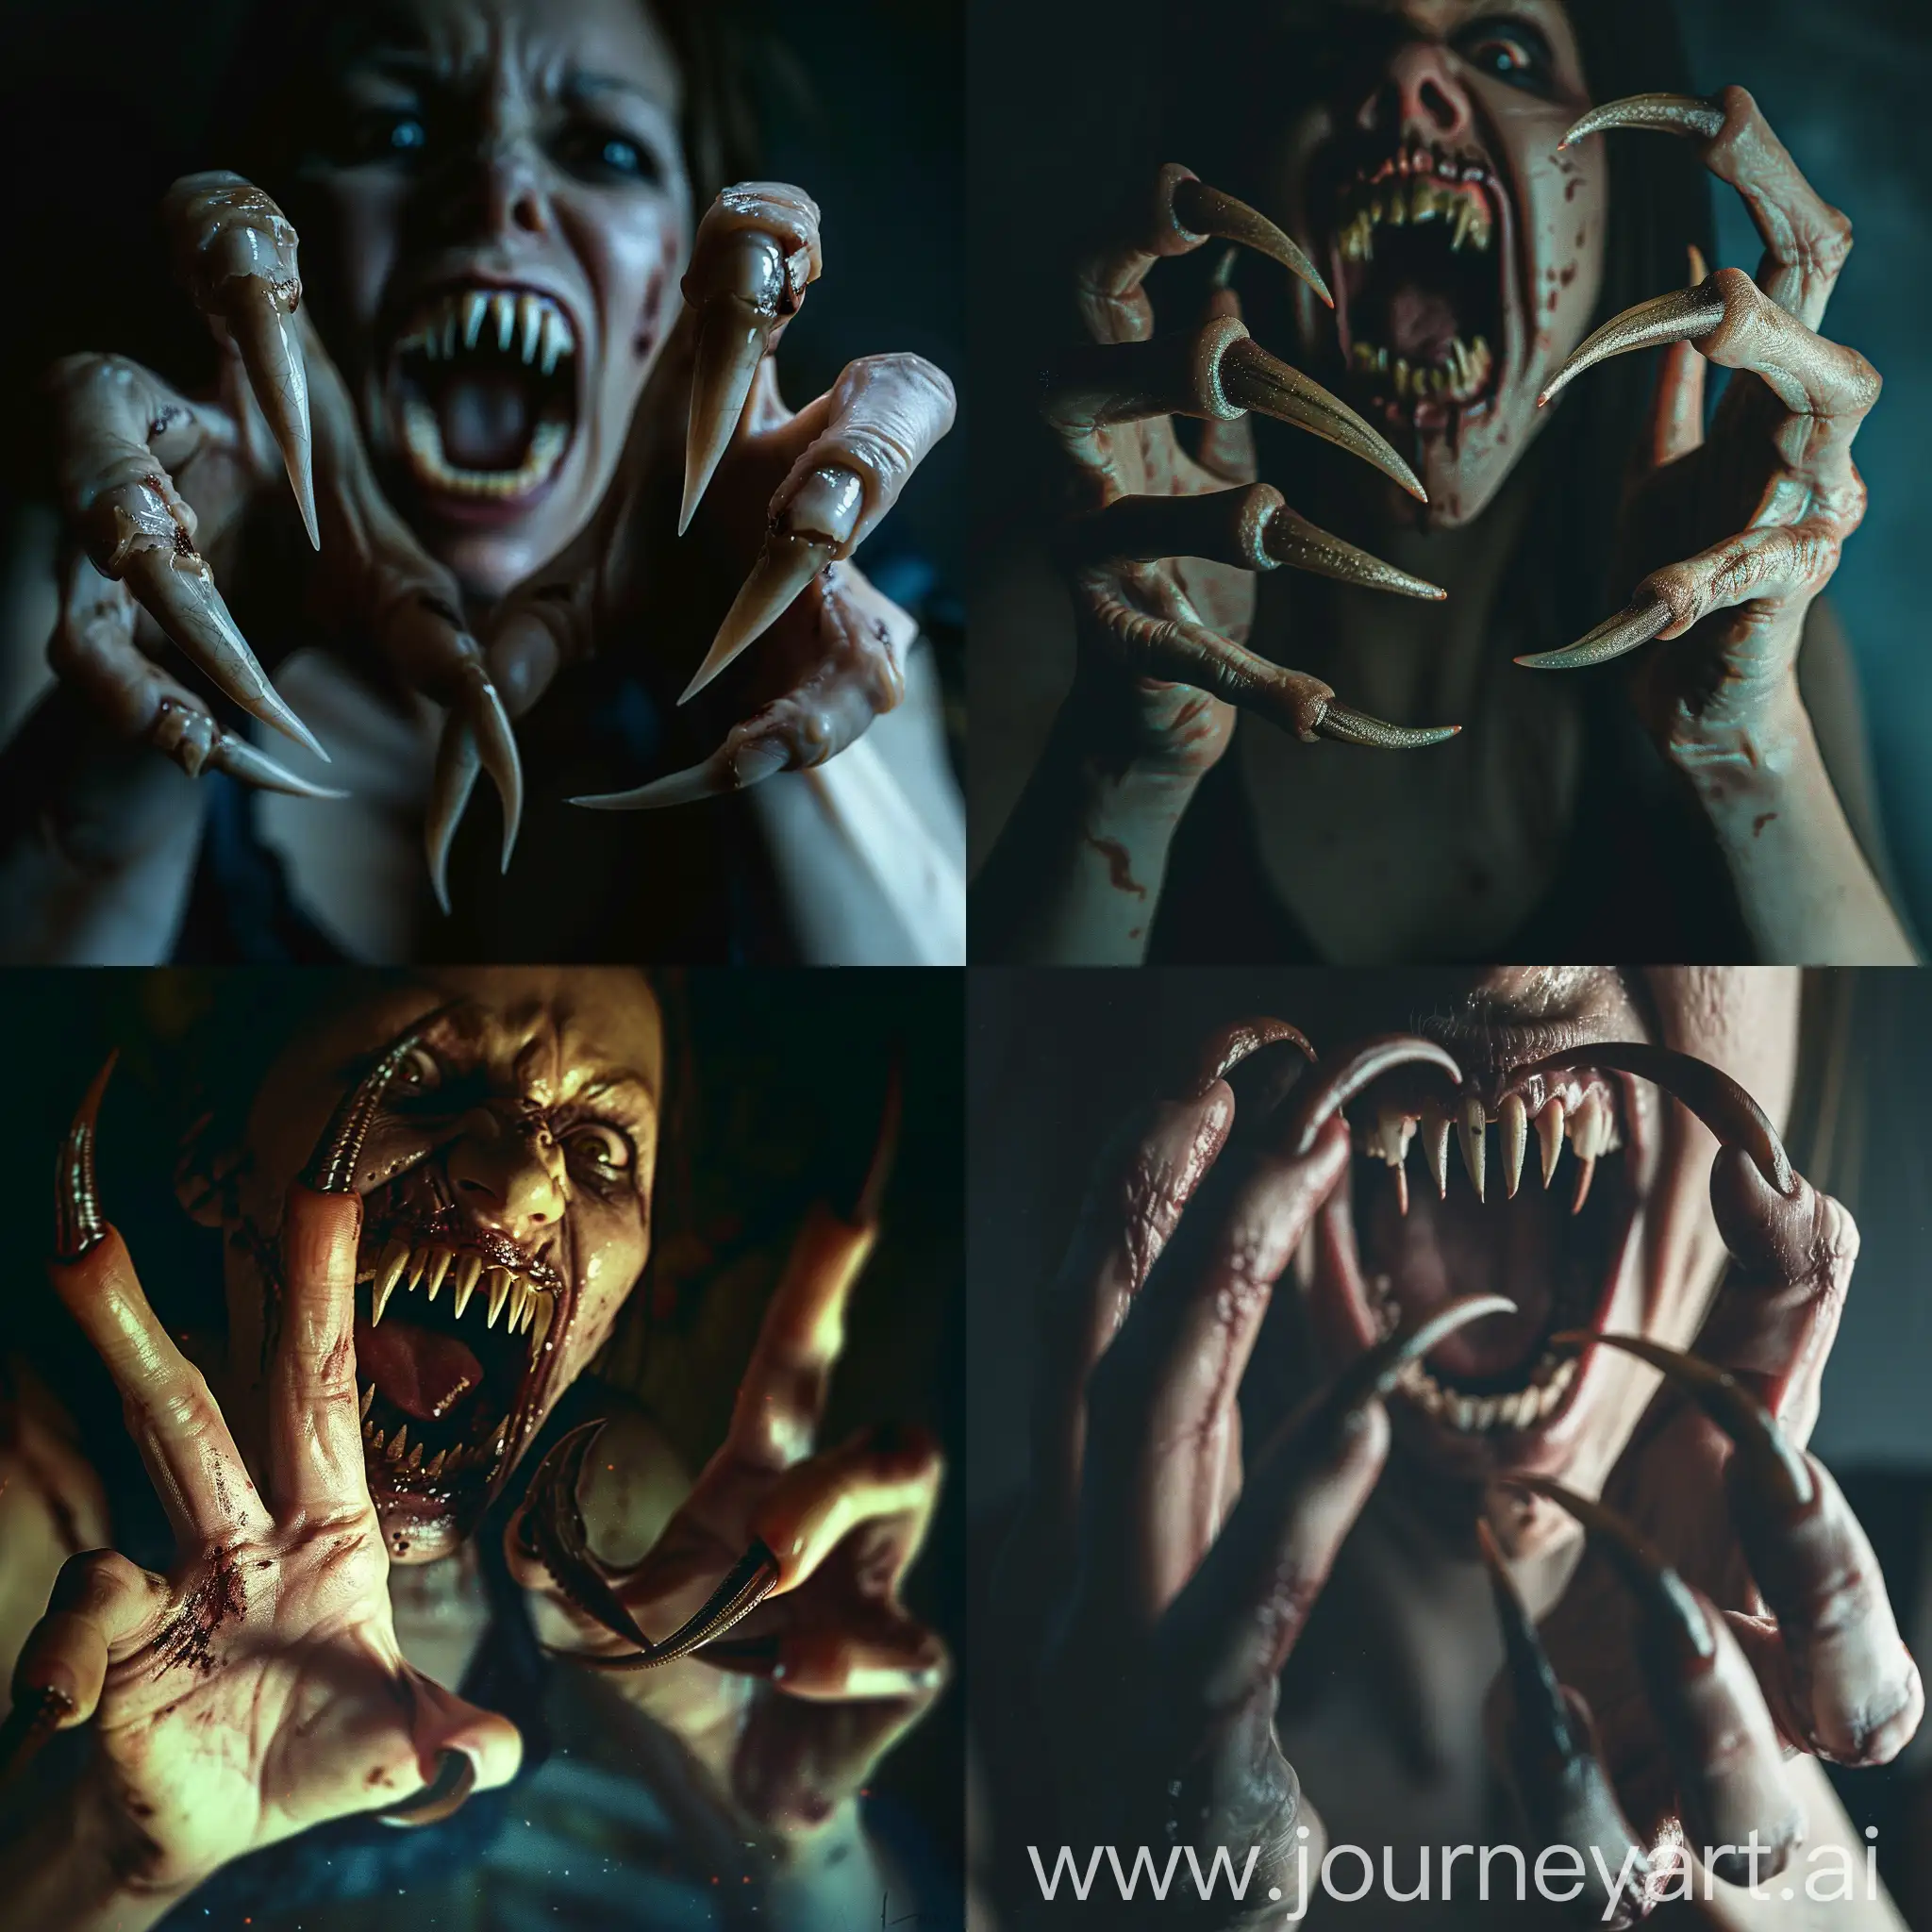 Menacing-Zombie-Woman-with-Beast-Claws-in-Nightmarish-Darkness